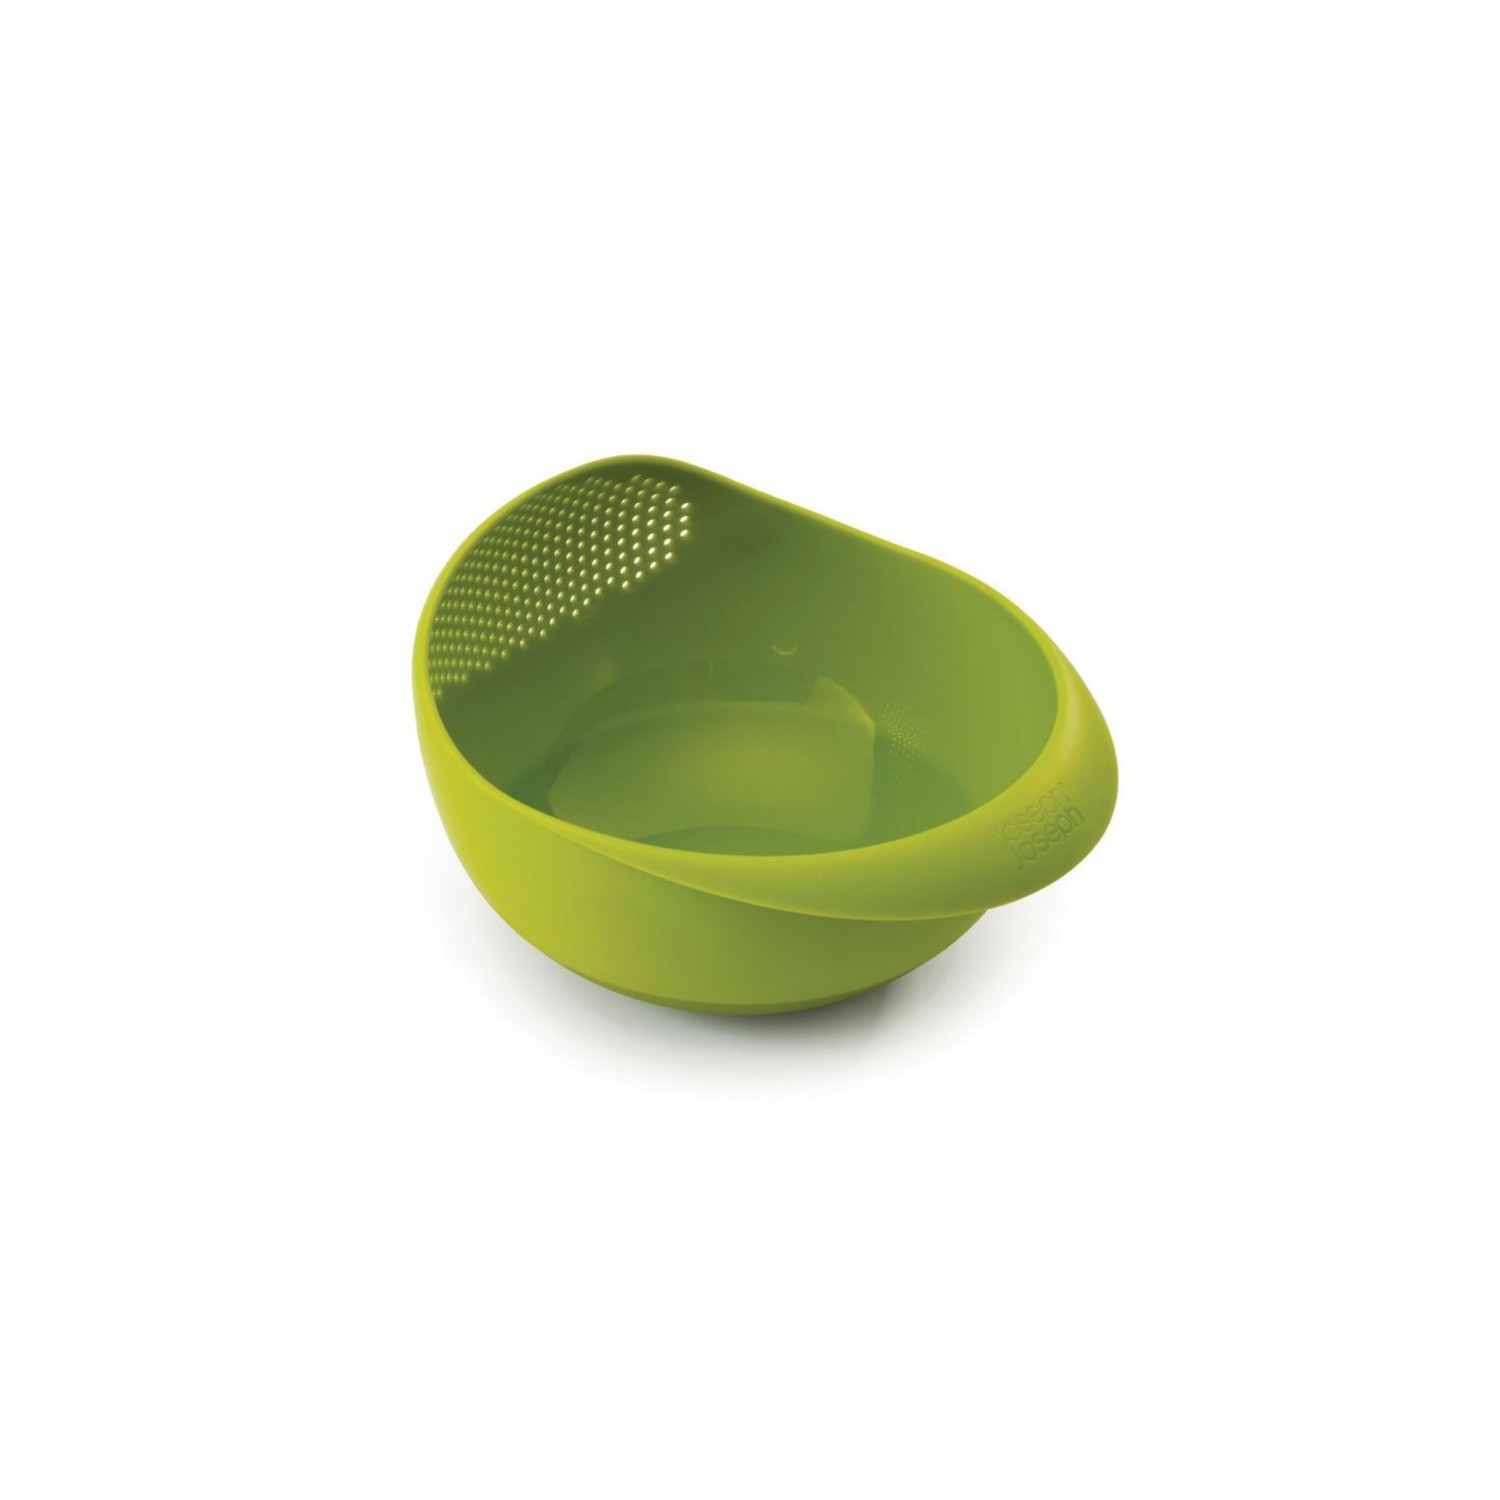 Multi-function bowl with integrated colander Large Green Joseph Joseph